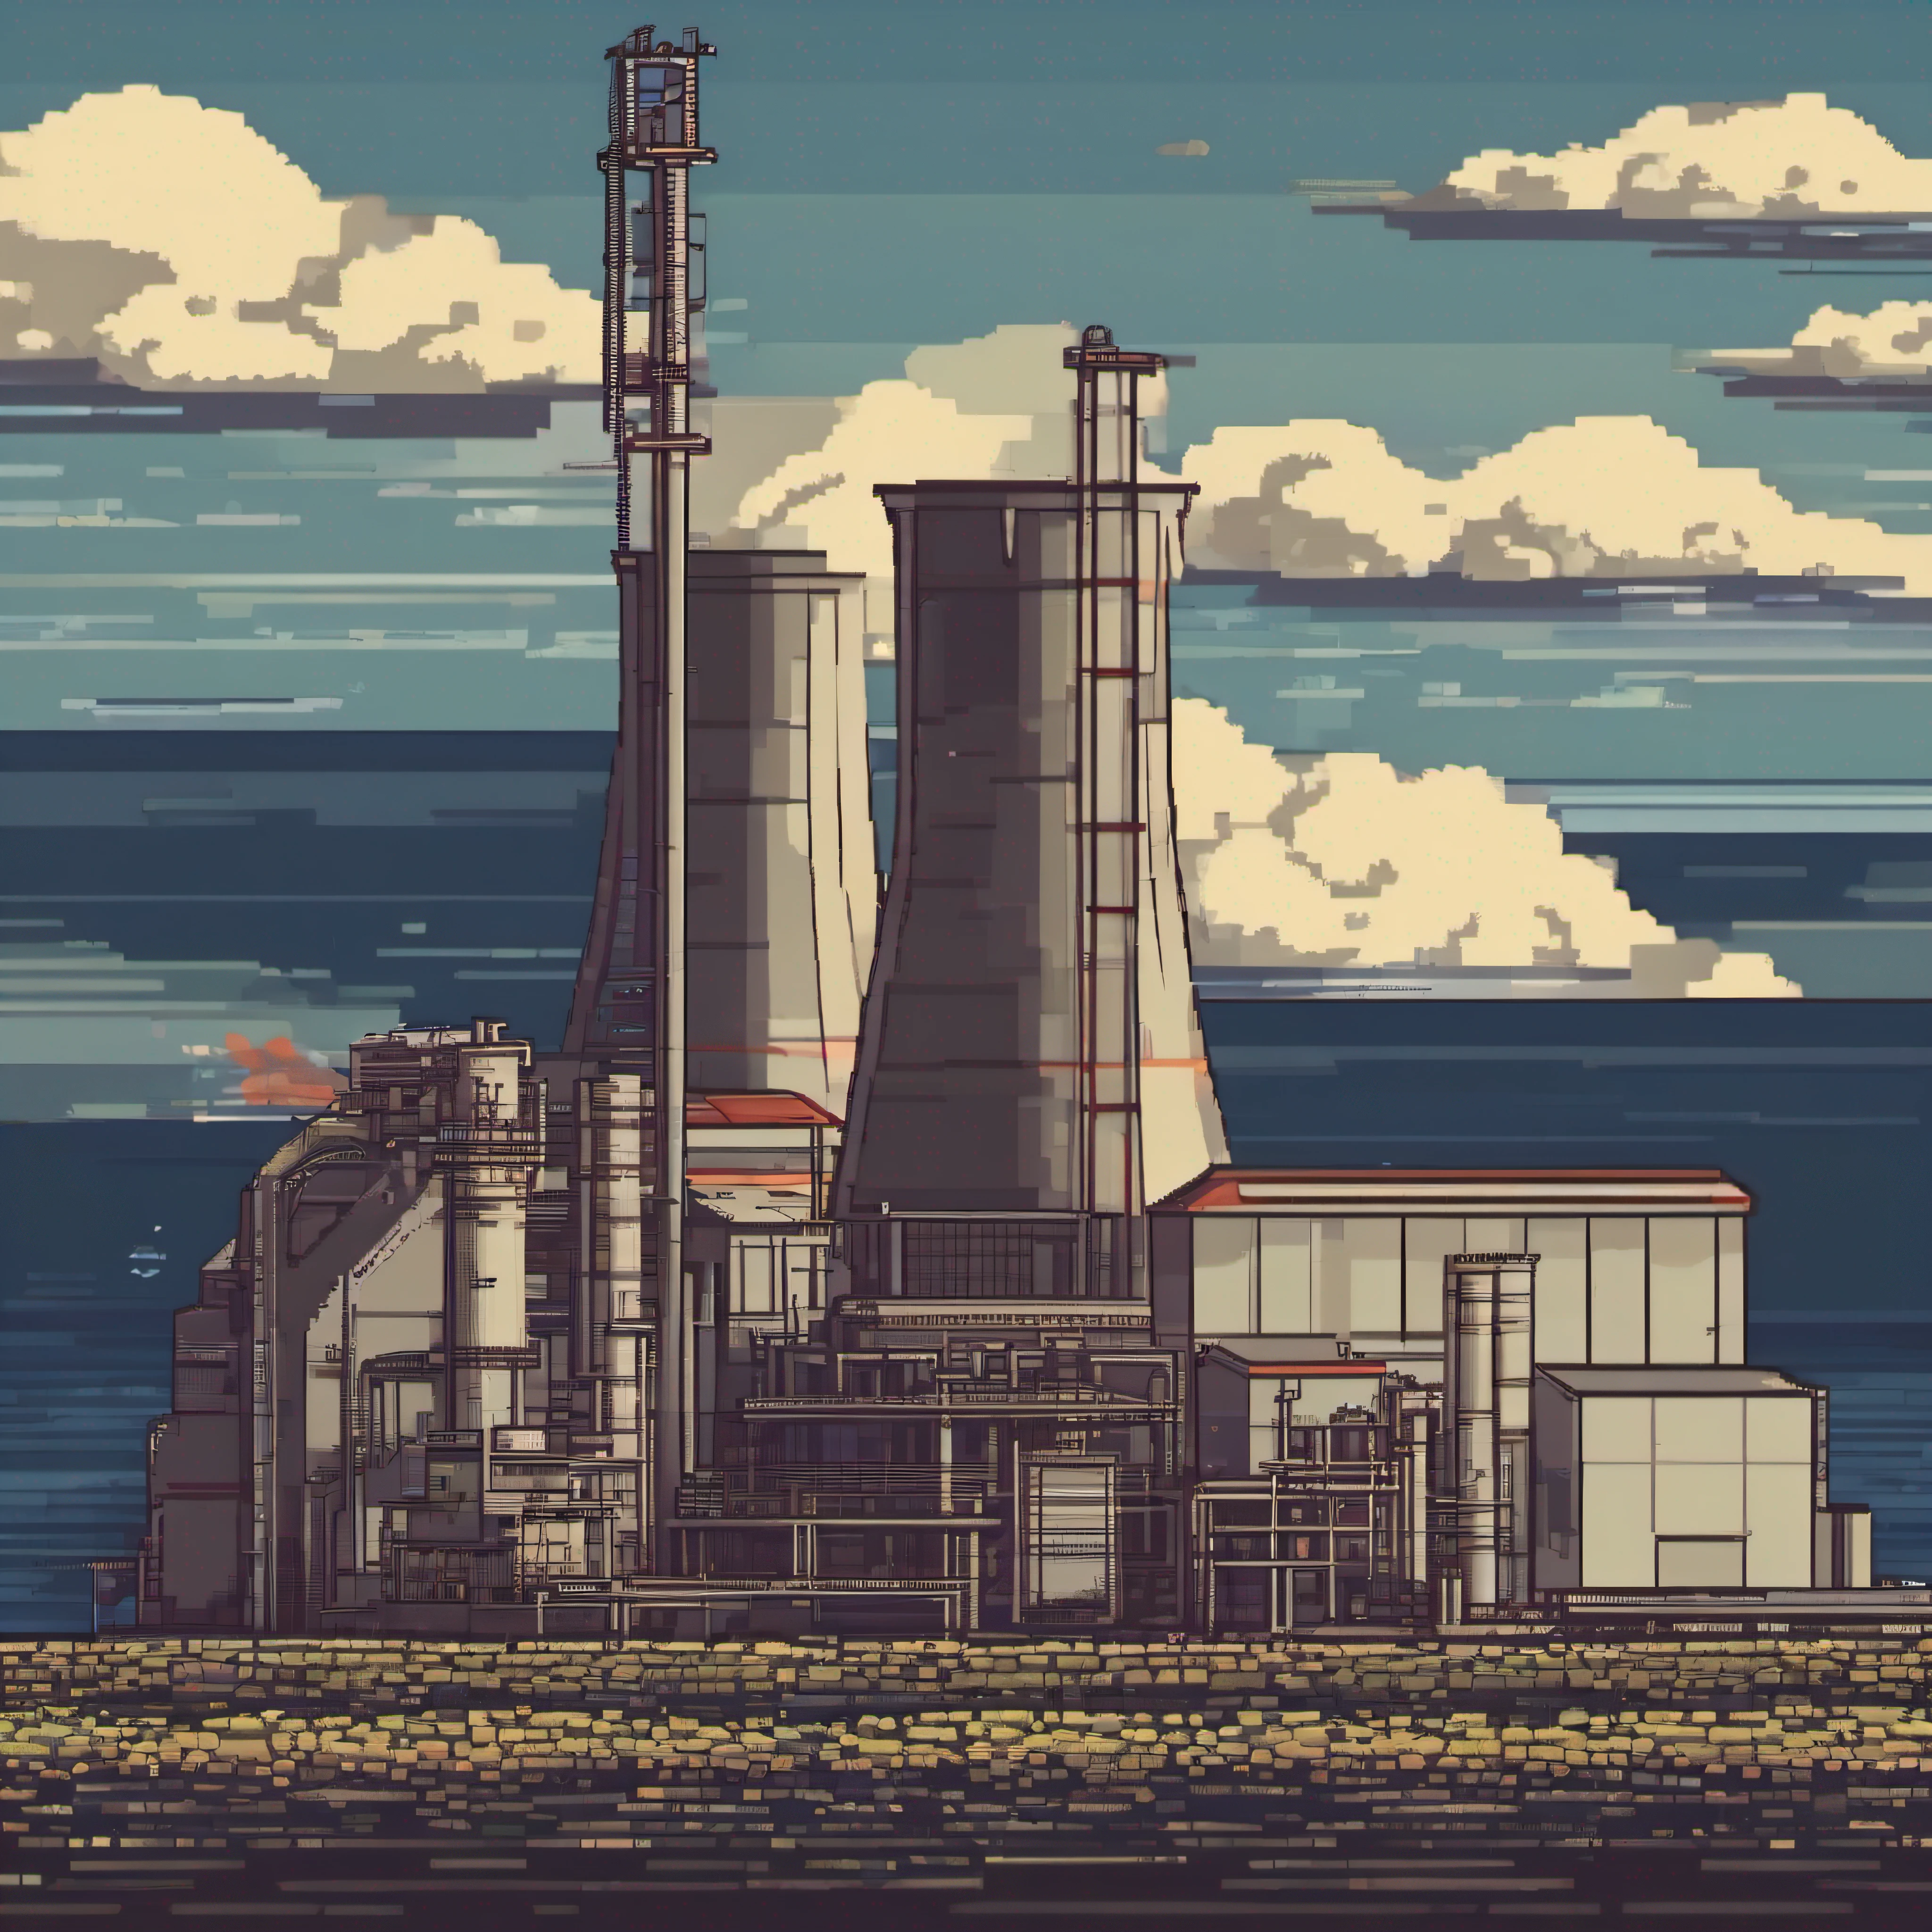 mills，nuclear power plant，the ocean，jpn，pix，pixelart